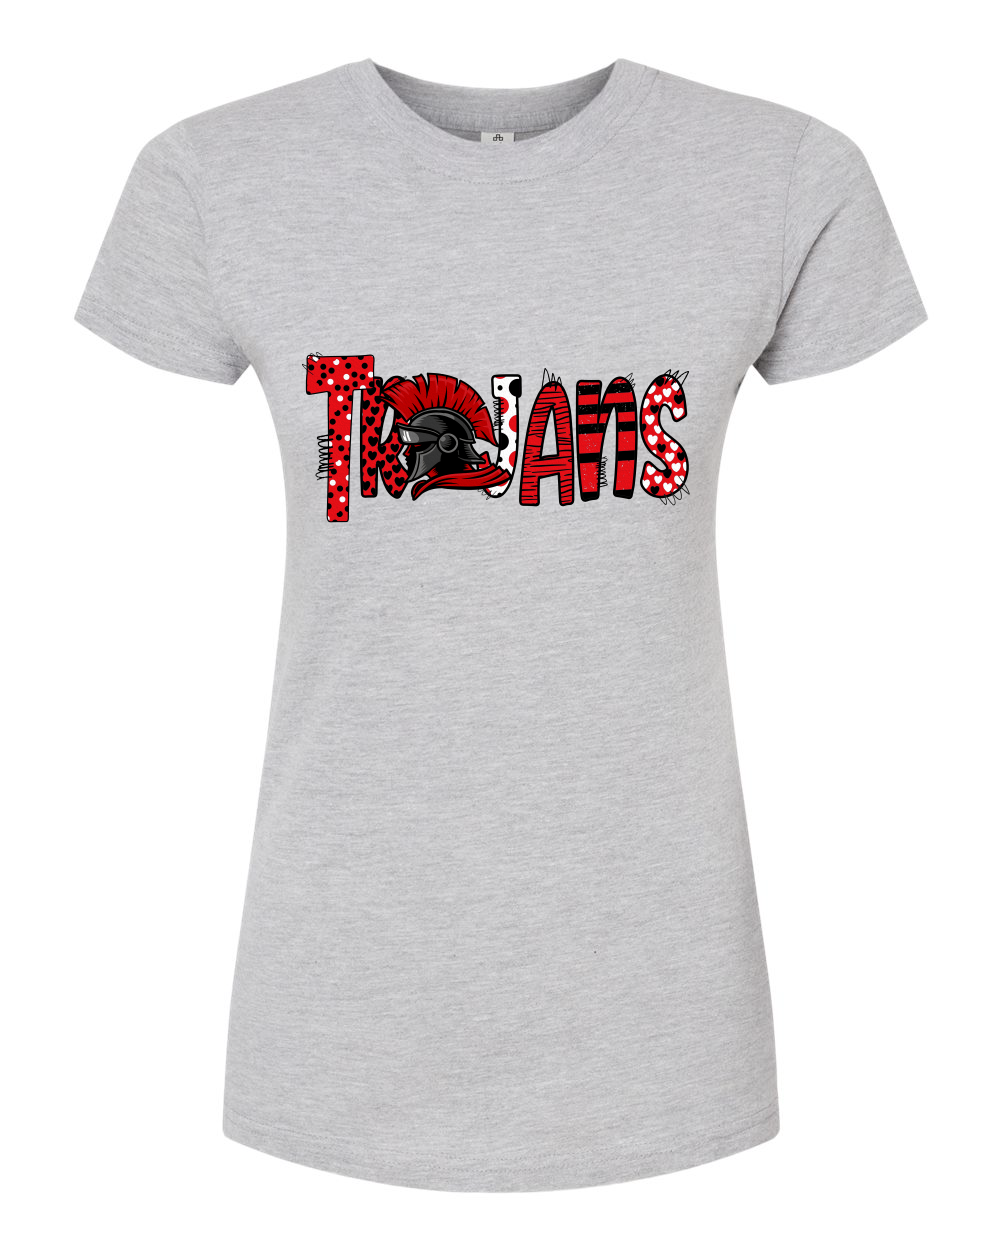 Lady Trojans Shirt